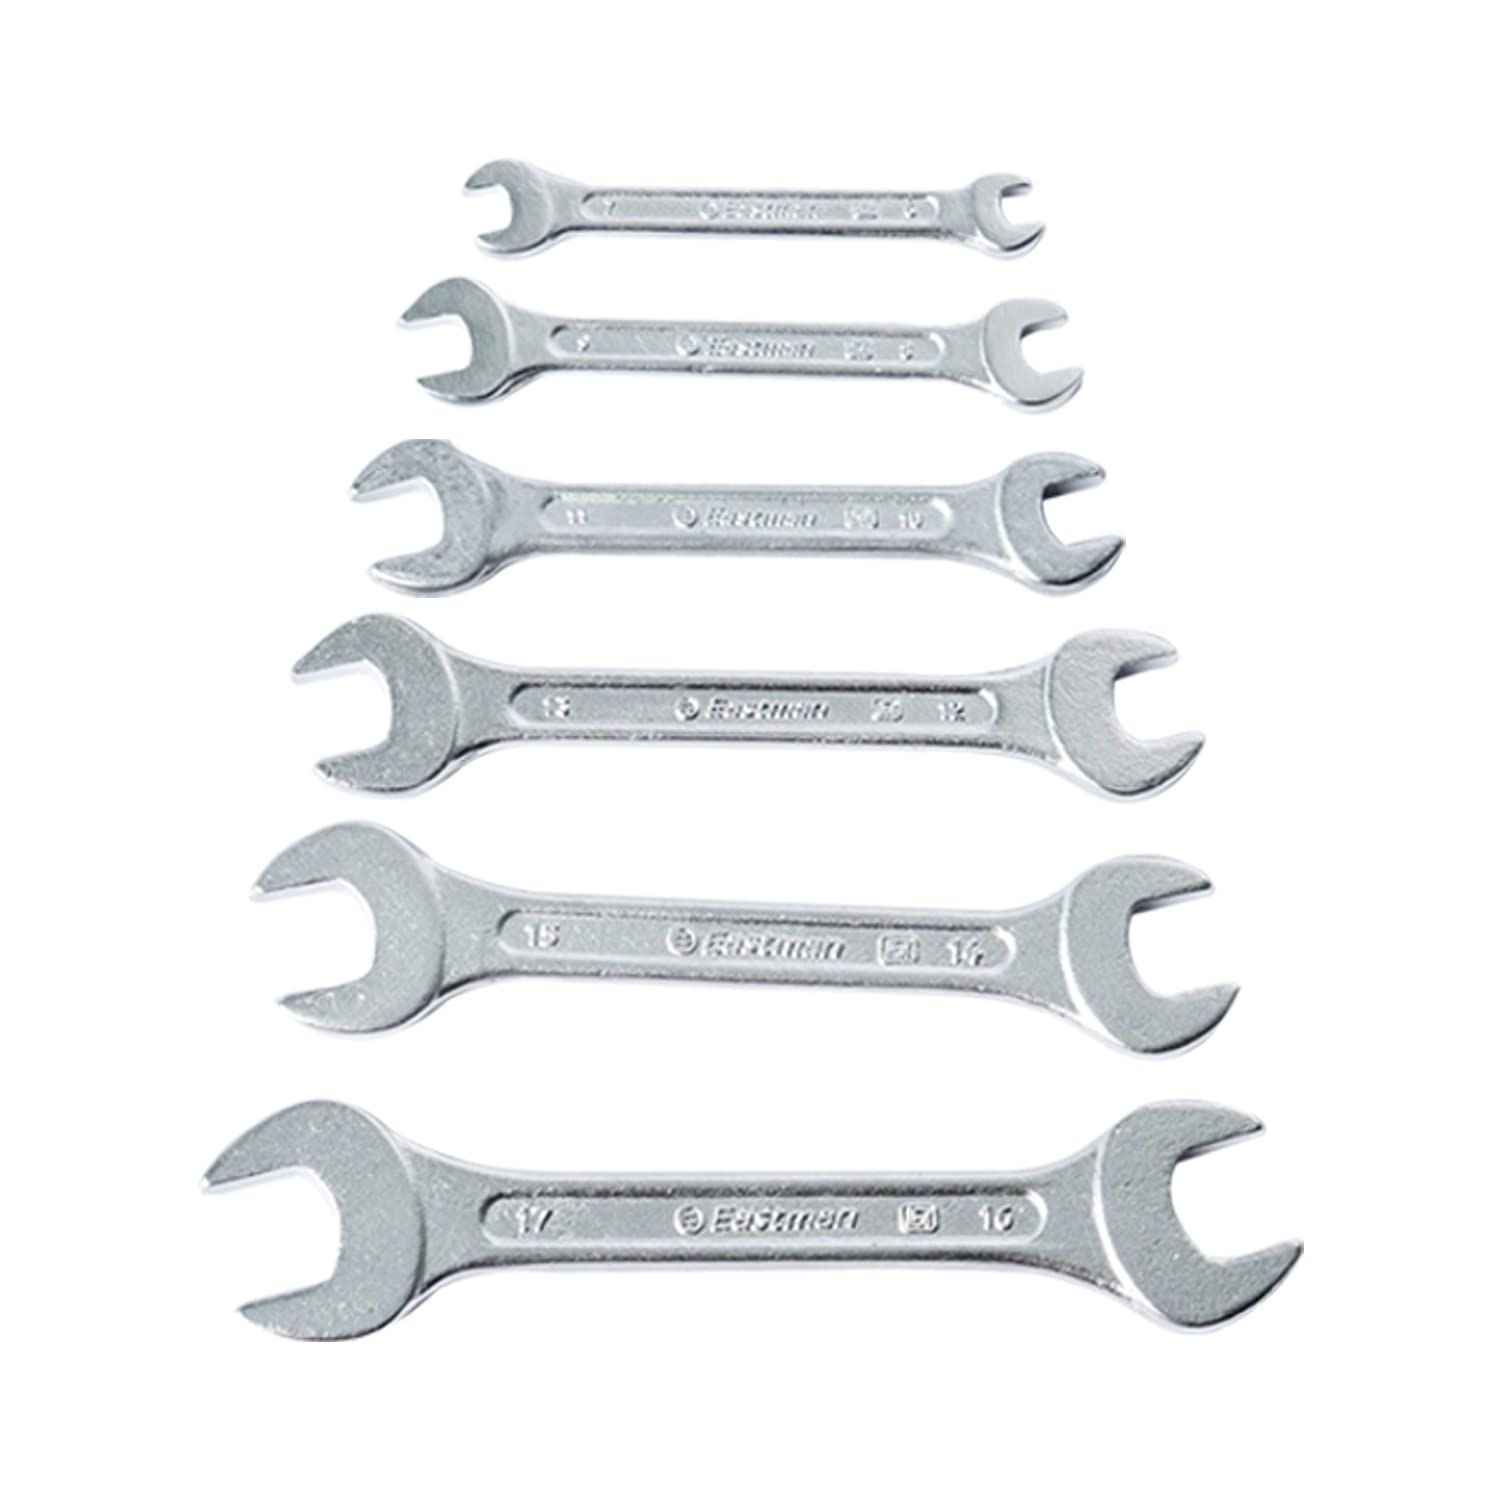 Eastman Doe Jaw Spanners | Crv 6 pcs Kit-03-60M, Chrome Vanadium Steel, Chrome Plated | Double Sided Open Wrench(E-2001)